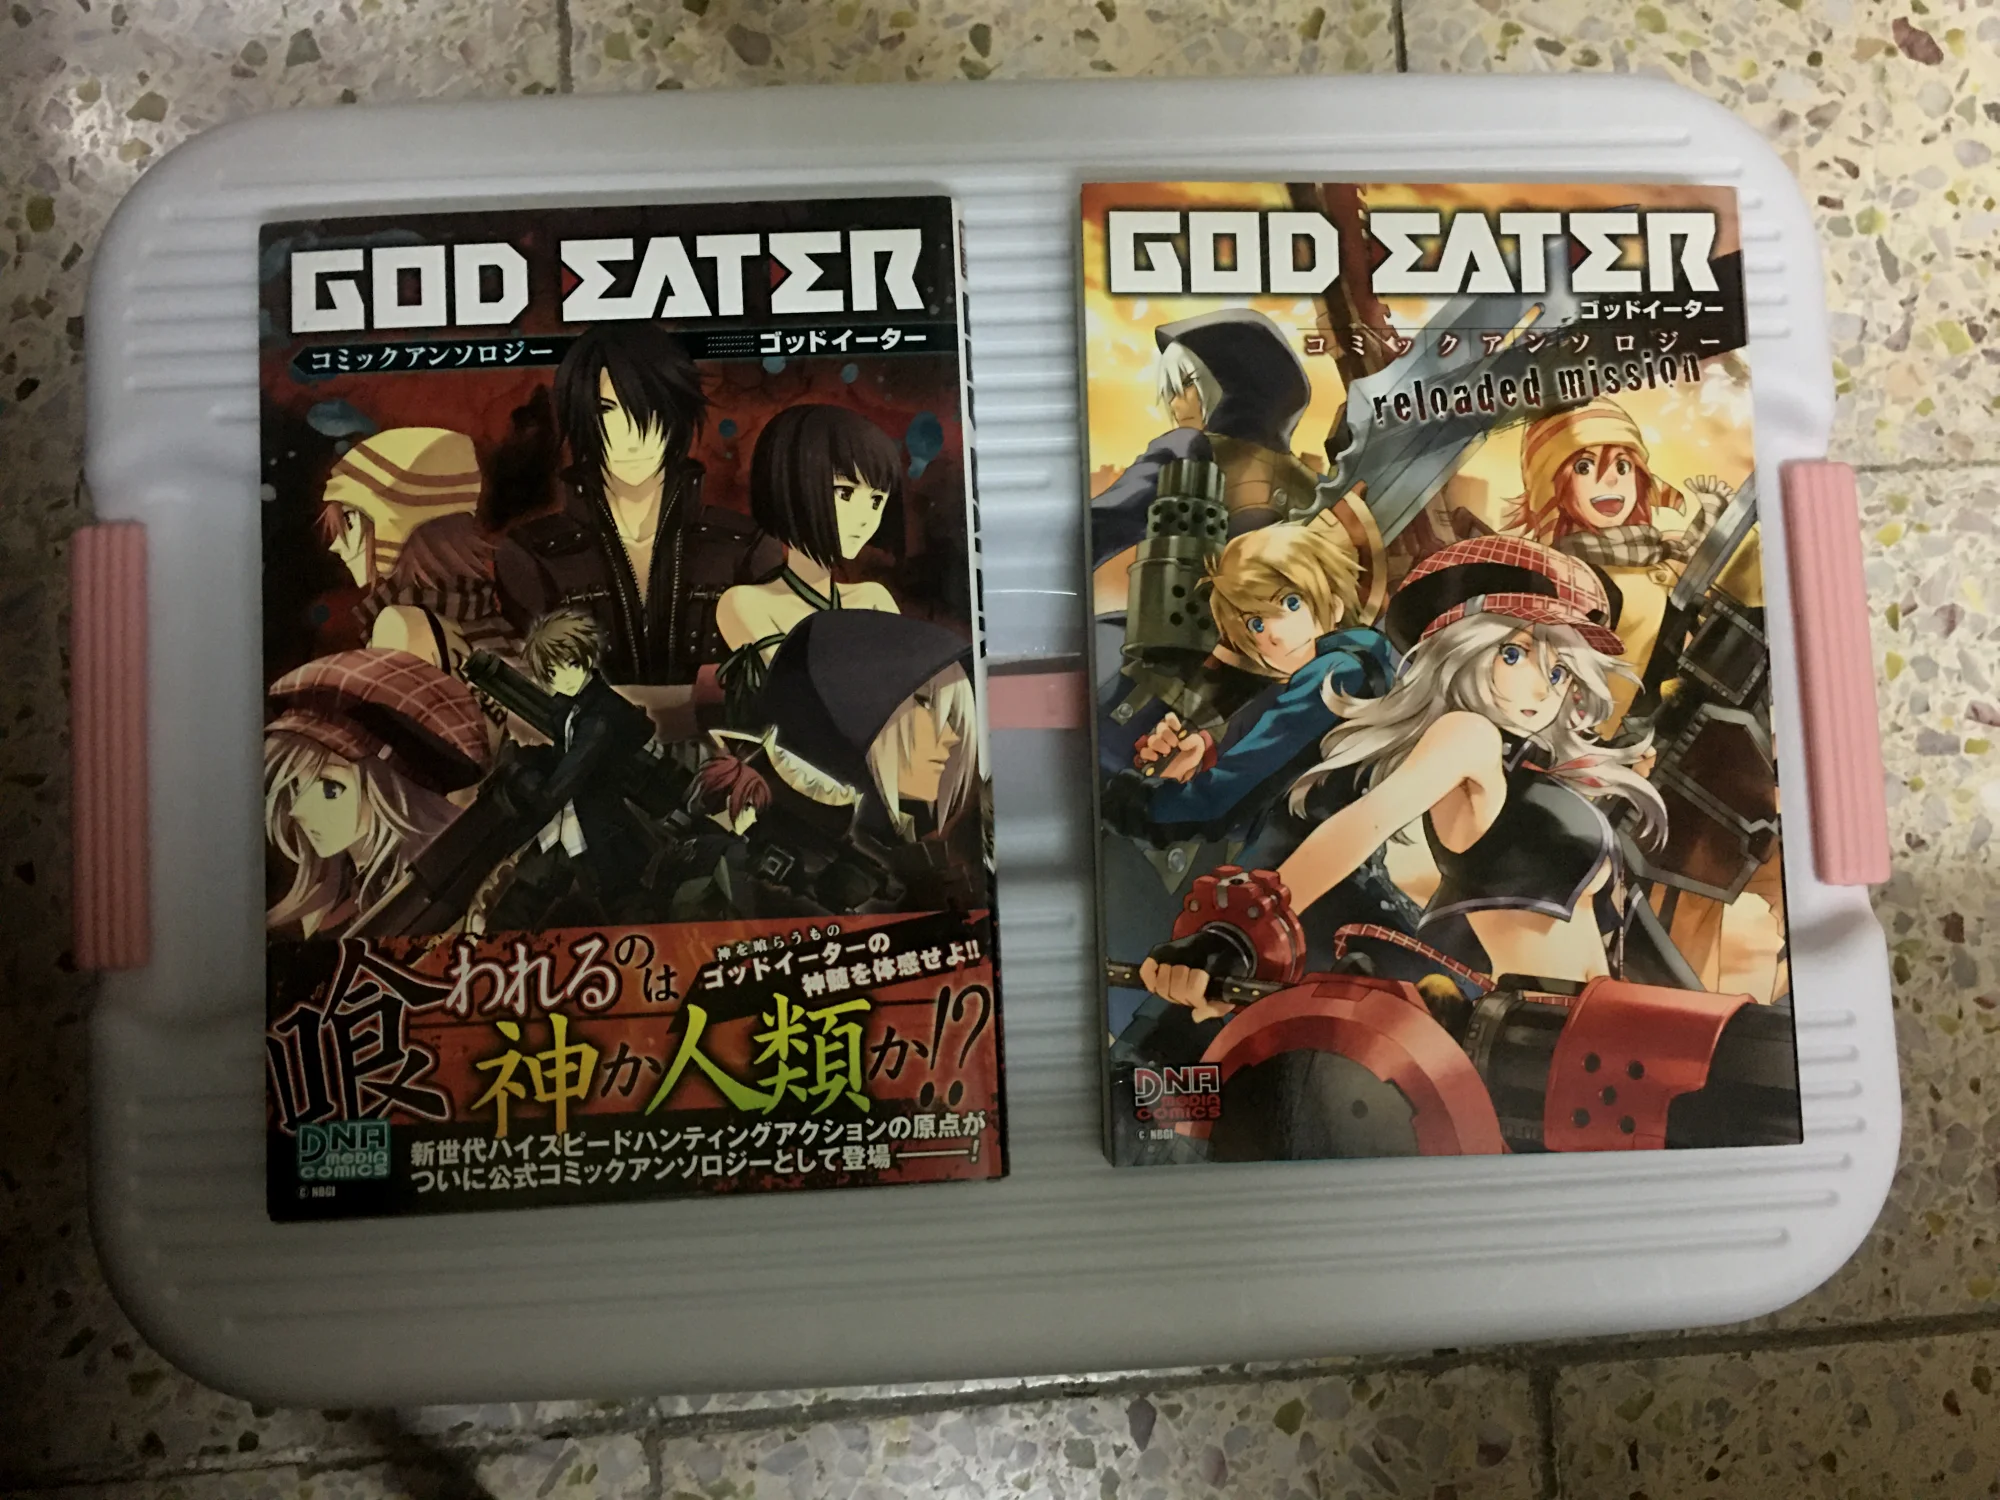 一迅社的《GOD EATER コミックアンソロジー》和《GOD EATER コミックアンソロジー reloaded mission》，往后的也全是一迅社出的